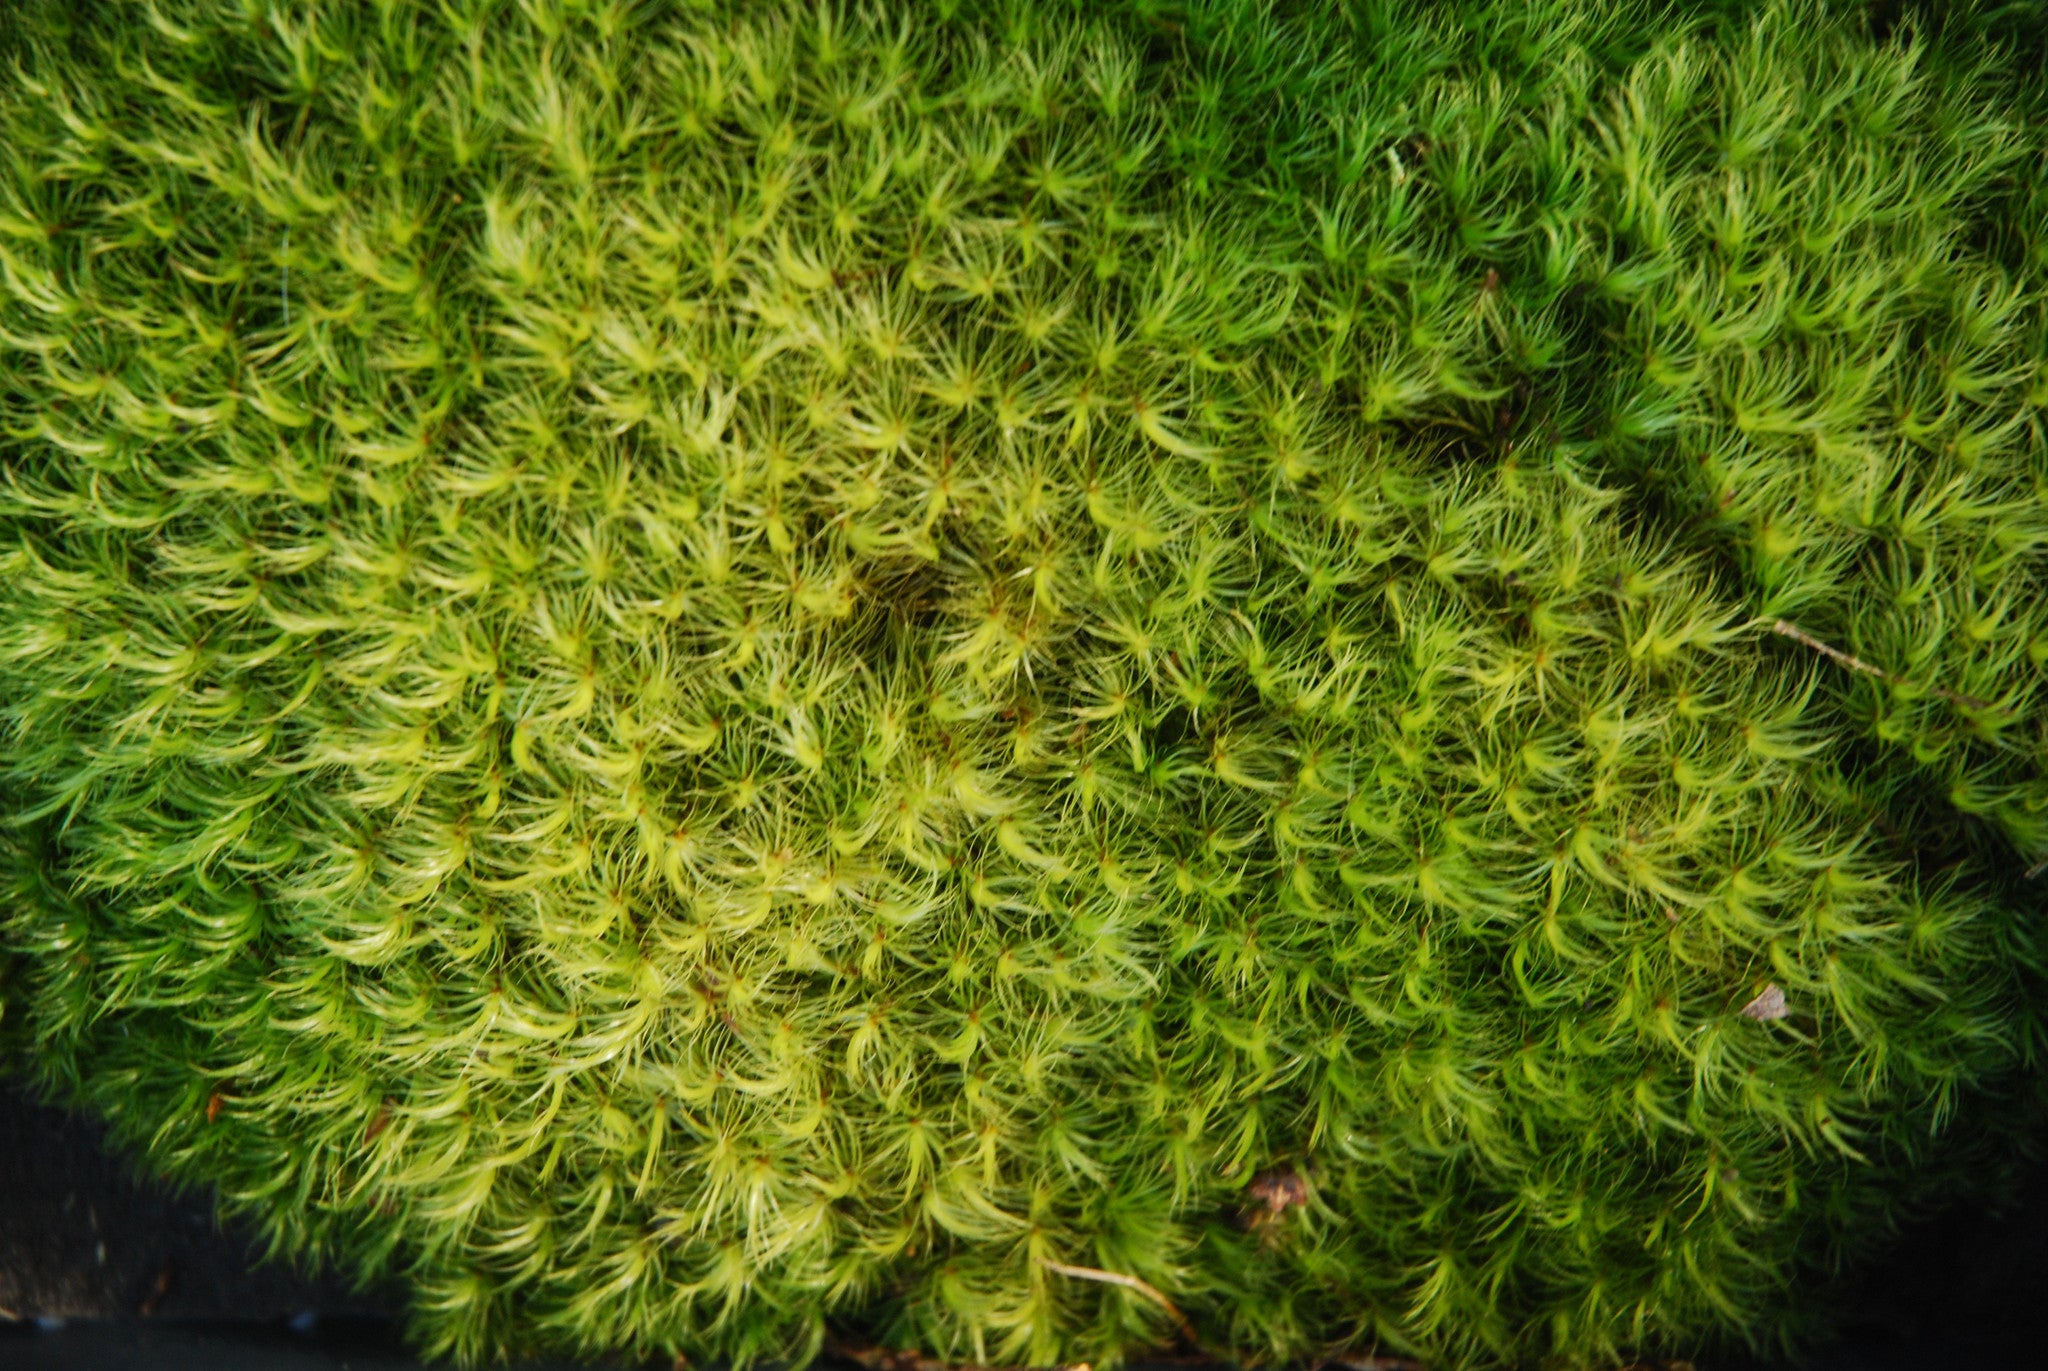 Moss, Small Wonder Beneath Our Feet